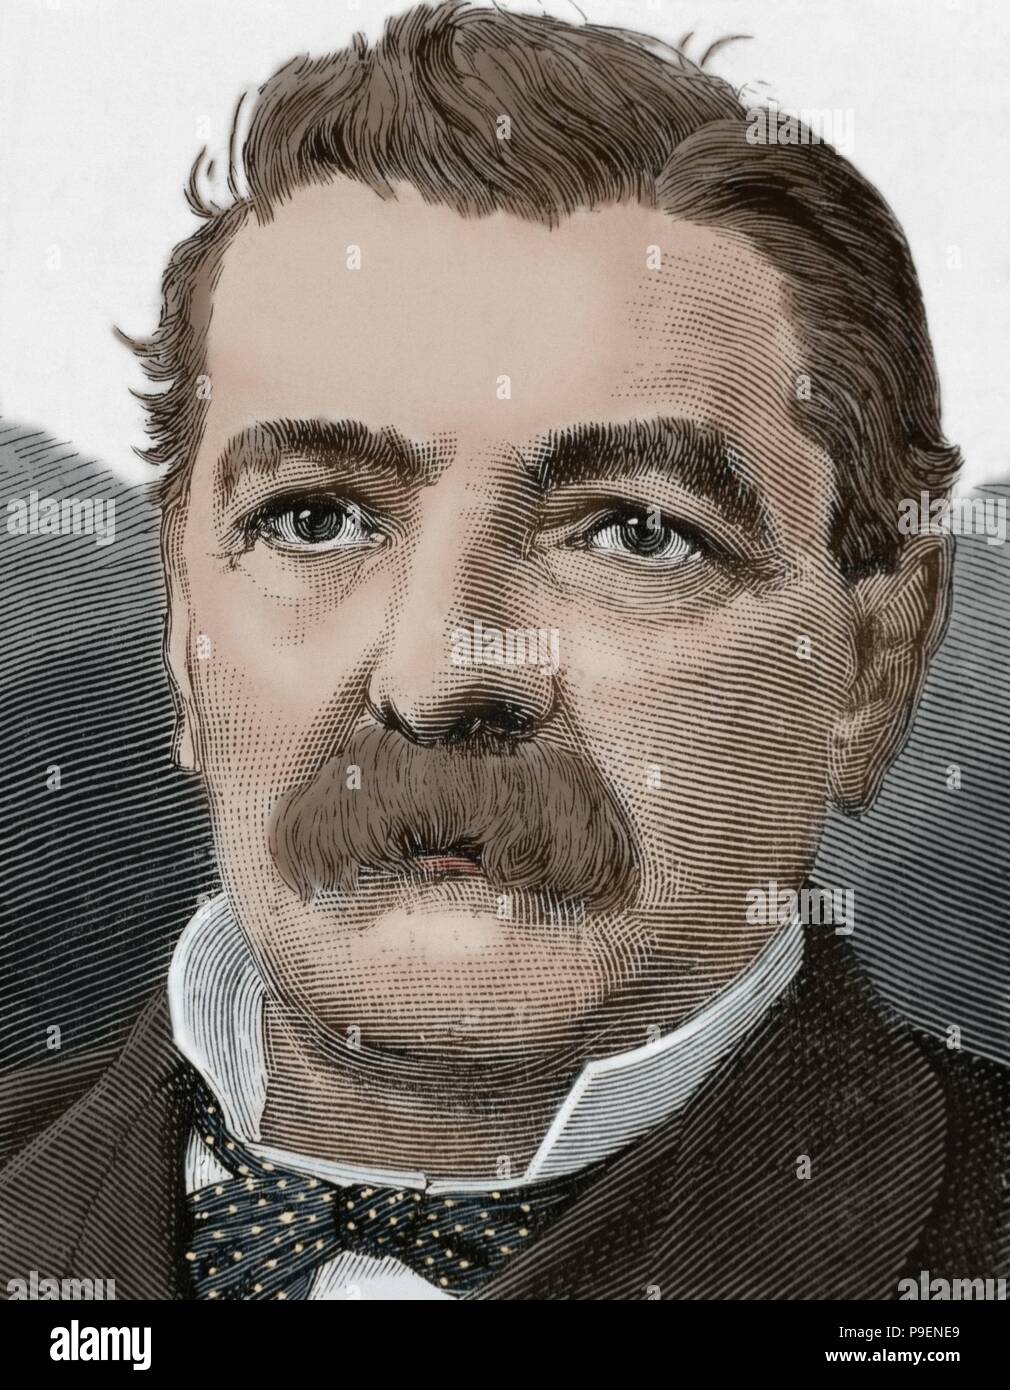 Domingo Santa Mari a Gonzalez (1825-1889). Chilean politician. President of Chile between 1881 and 1886. Portrait. Engraving. Colored. Stock Photo